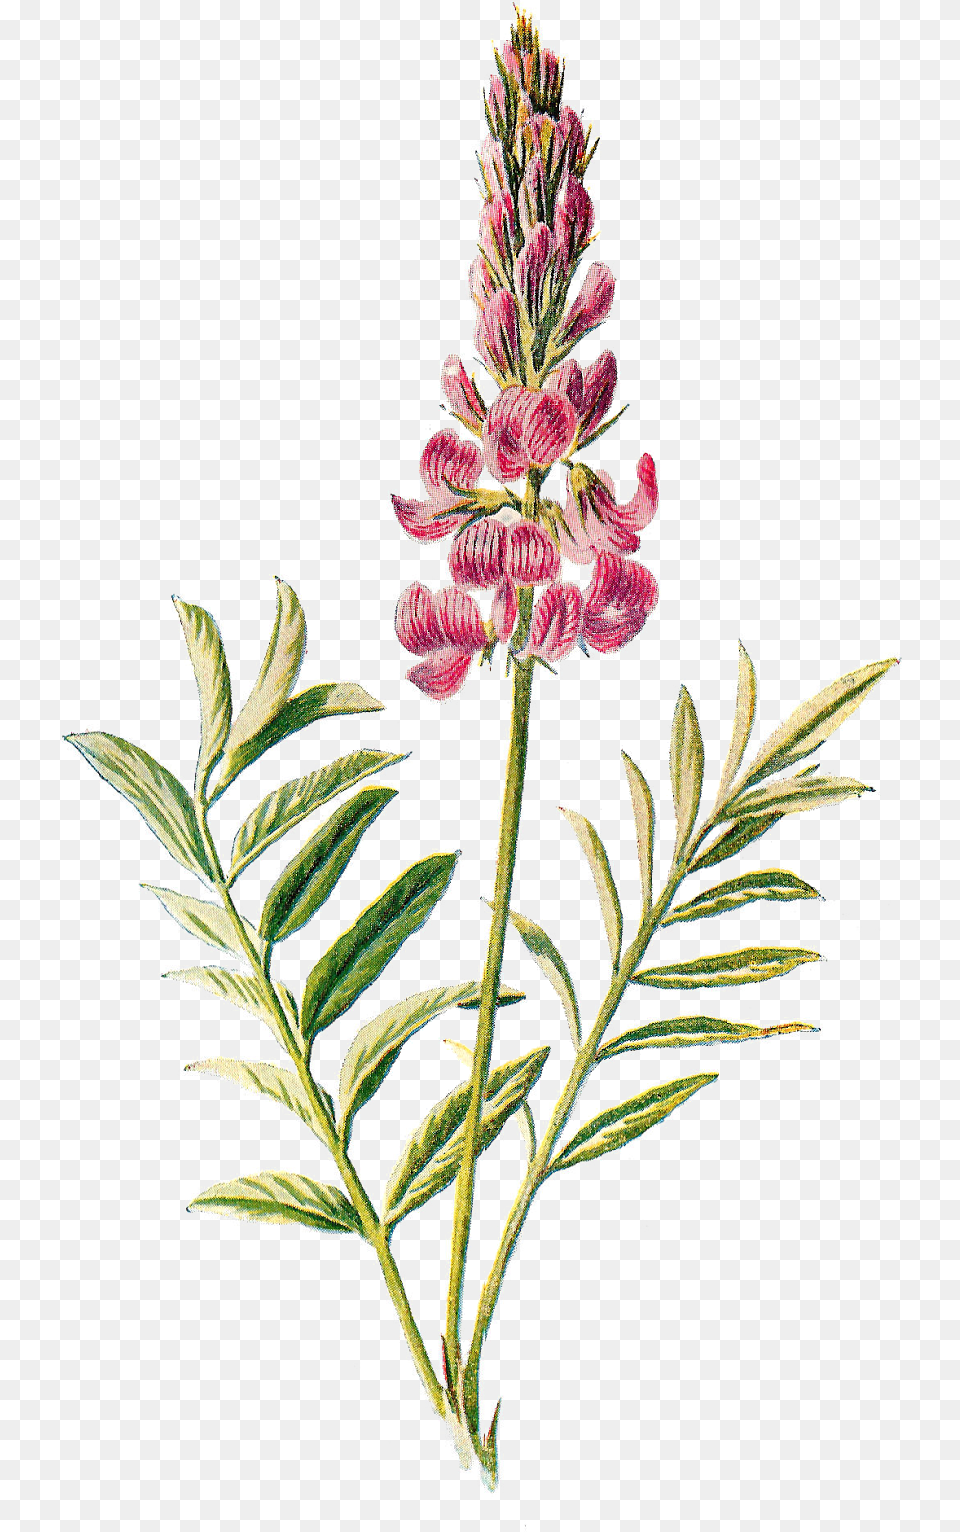 Wild Flowers Kbytes Vintage Flower Illustration, Lupin, Plant, Grass, Astragalus Png Image